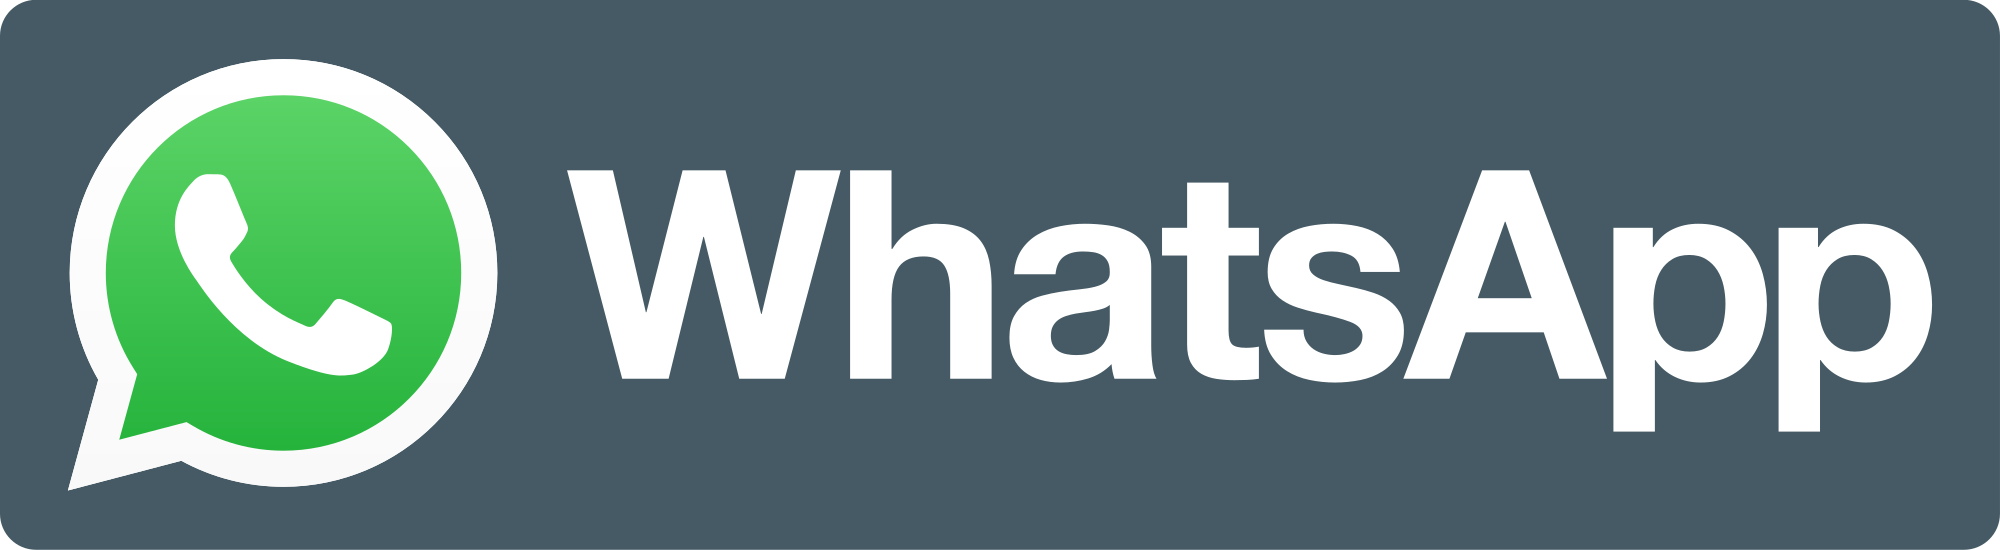 https://upload.wikimedia.org/wikipedia/commons/thumb/f/f7/WhatsApp_logo.svg/2000px-WhatsApp_logo.svg.png